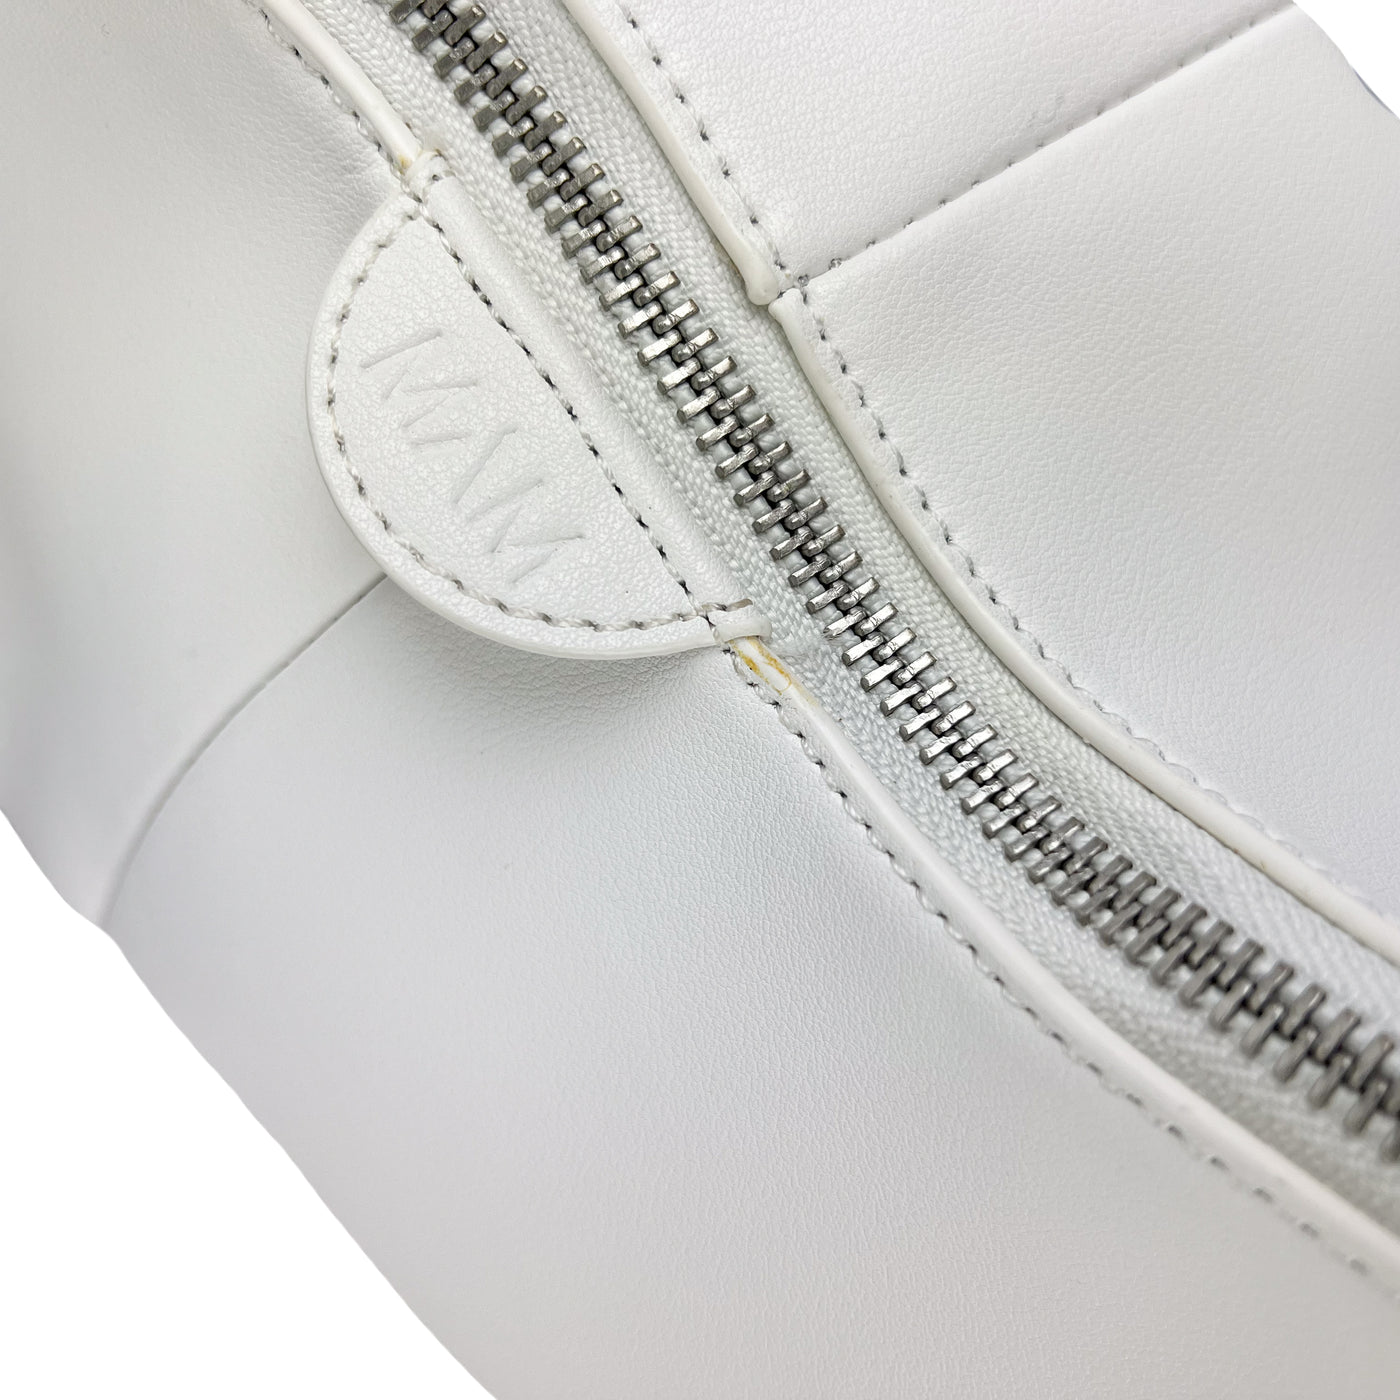 Exclusive Designer BE.U 202 Crossbody Bag in White - Discounts on Exclusive Designer at UAL